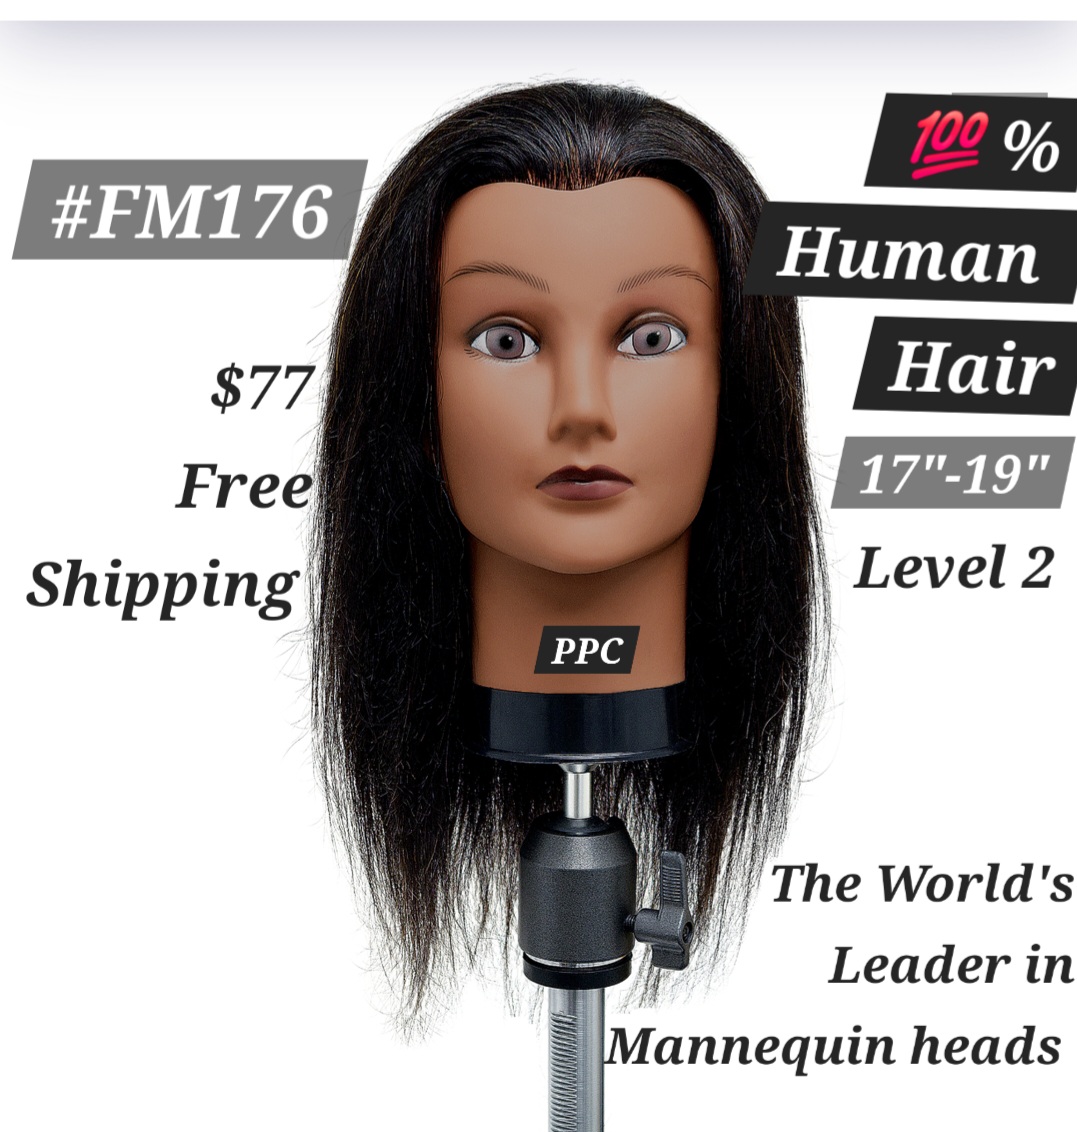 #FM176 PPC Dark-Skin tone, Dk. Brn 17-19 inch Level 2 Higher Quality 💯 % Human Hair Practice Mannequin Head.